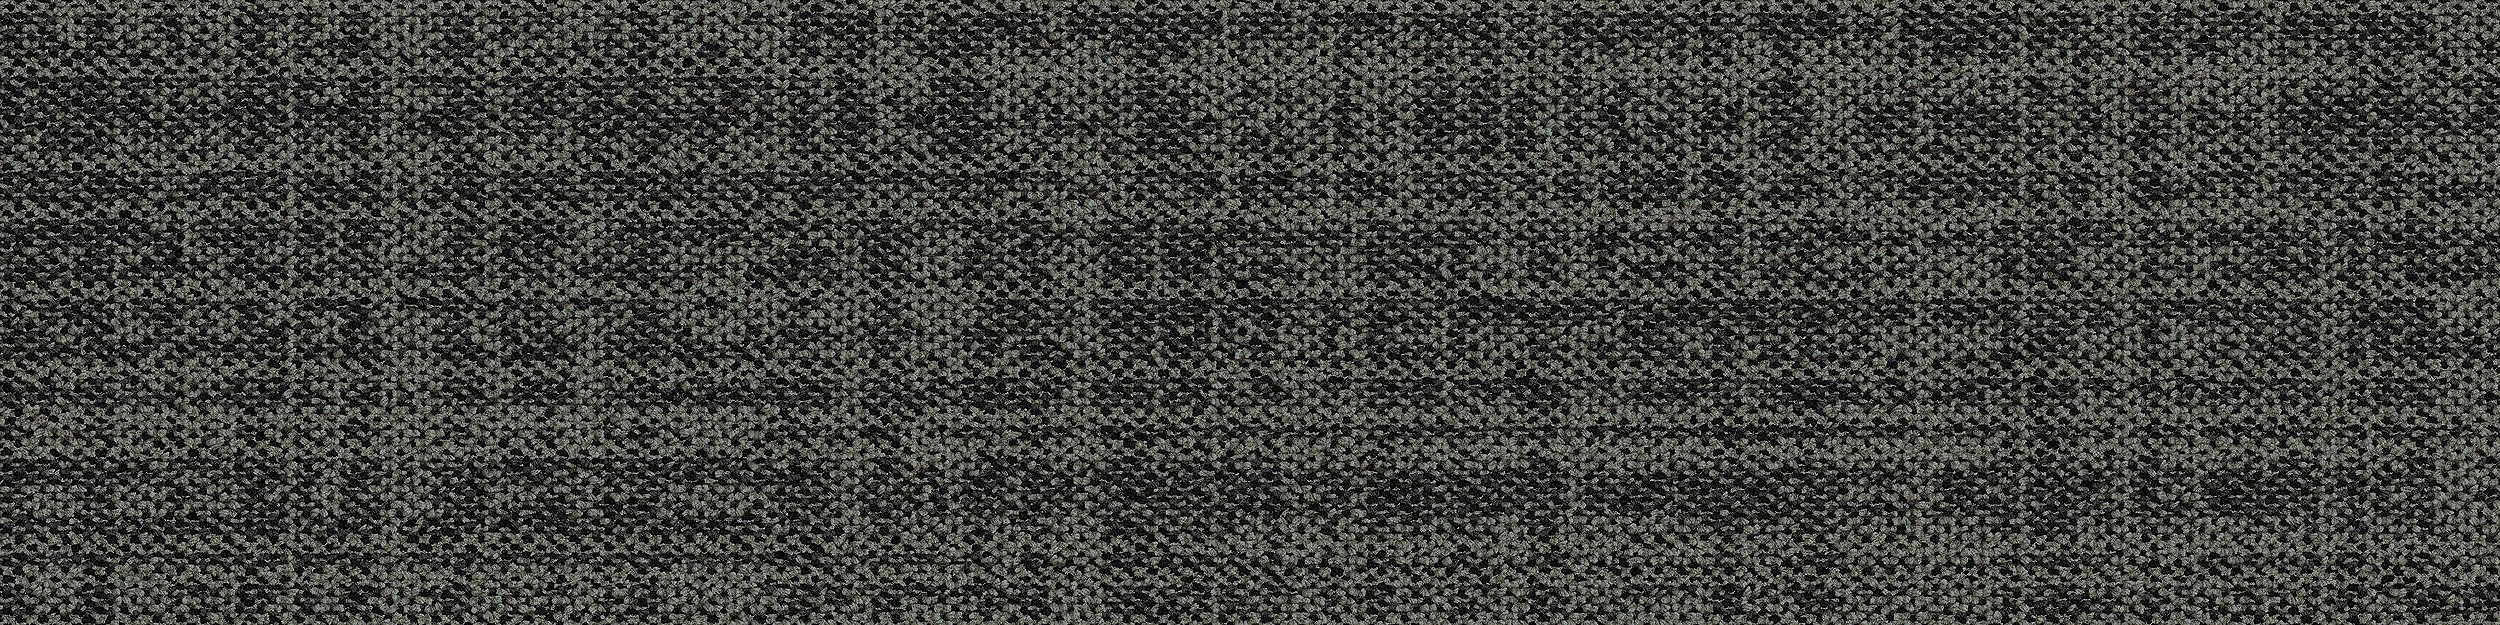 Source Material Carpet Tile In Iron imagen número 4